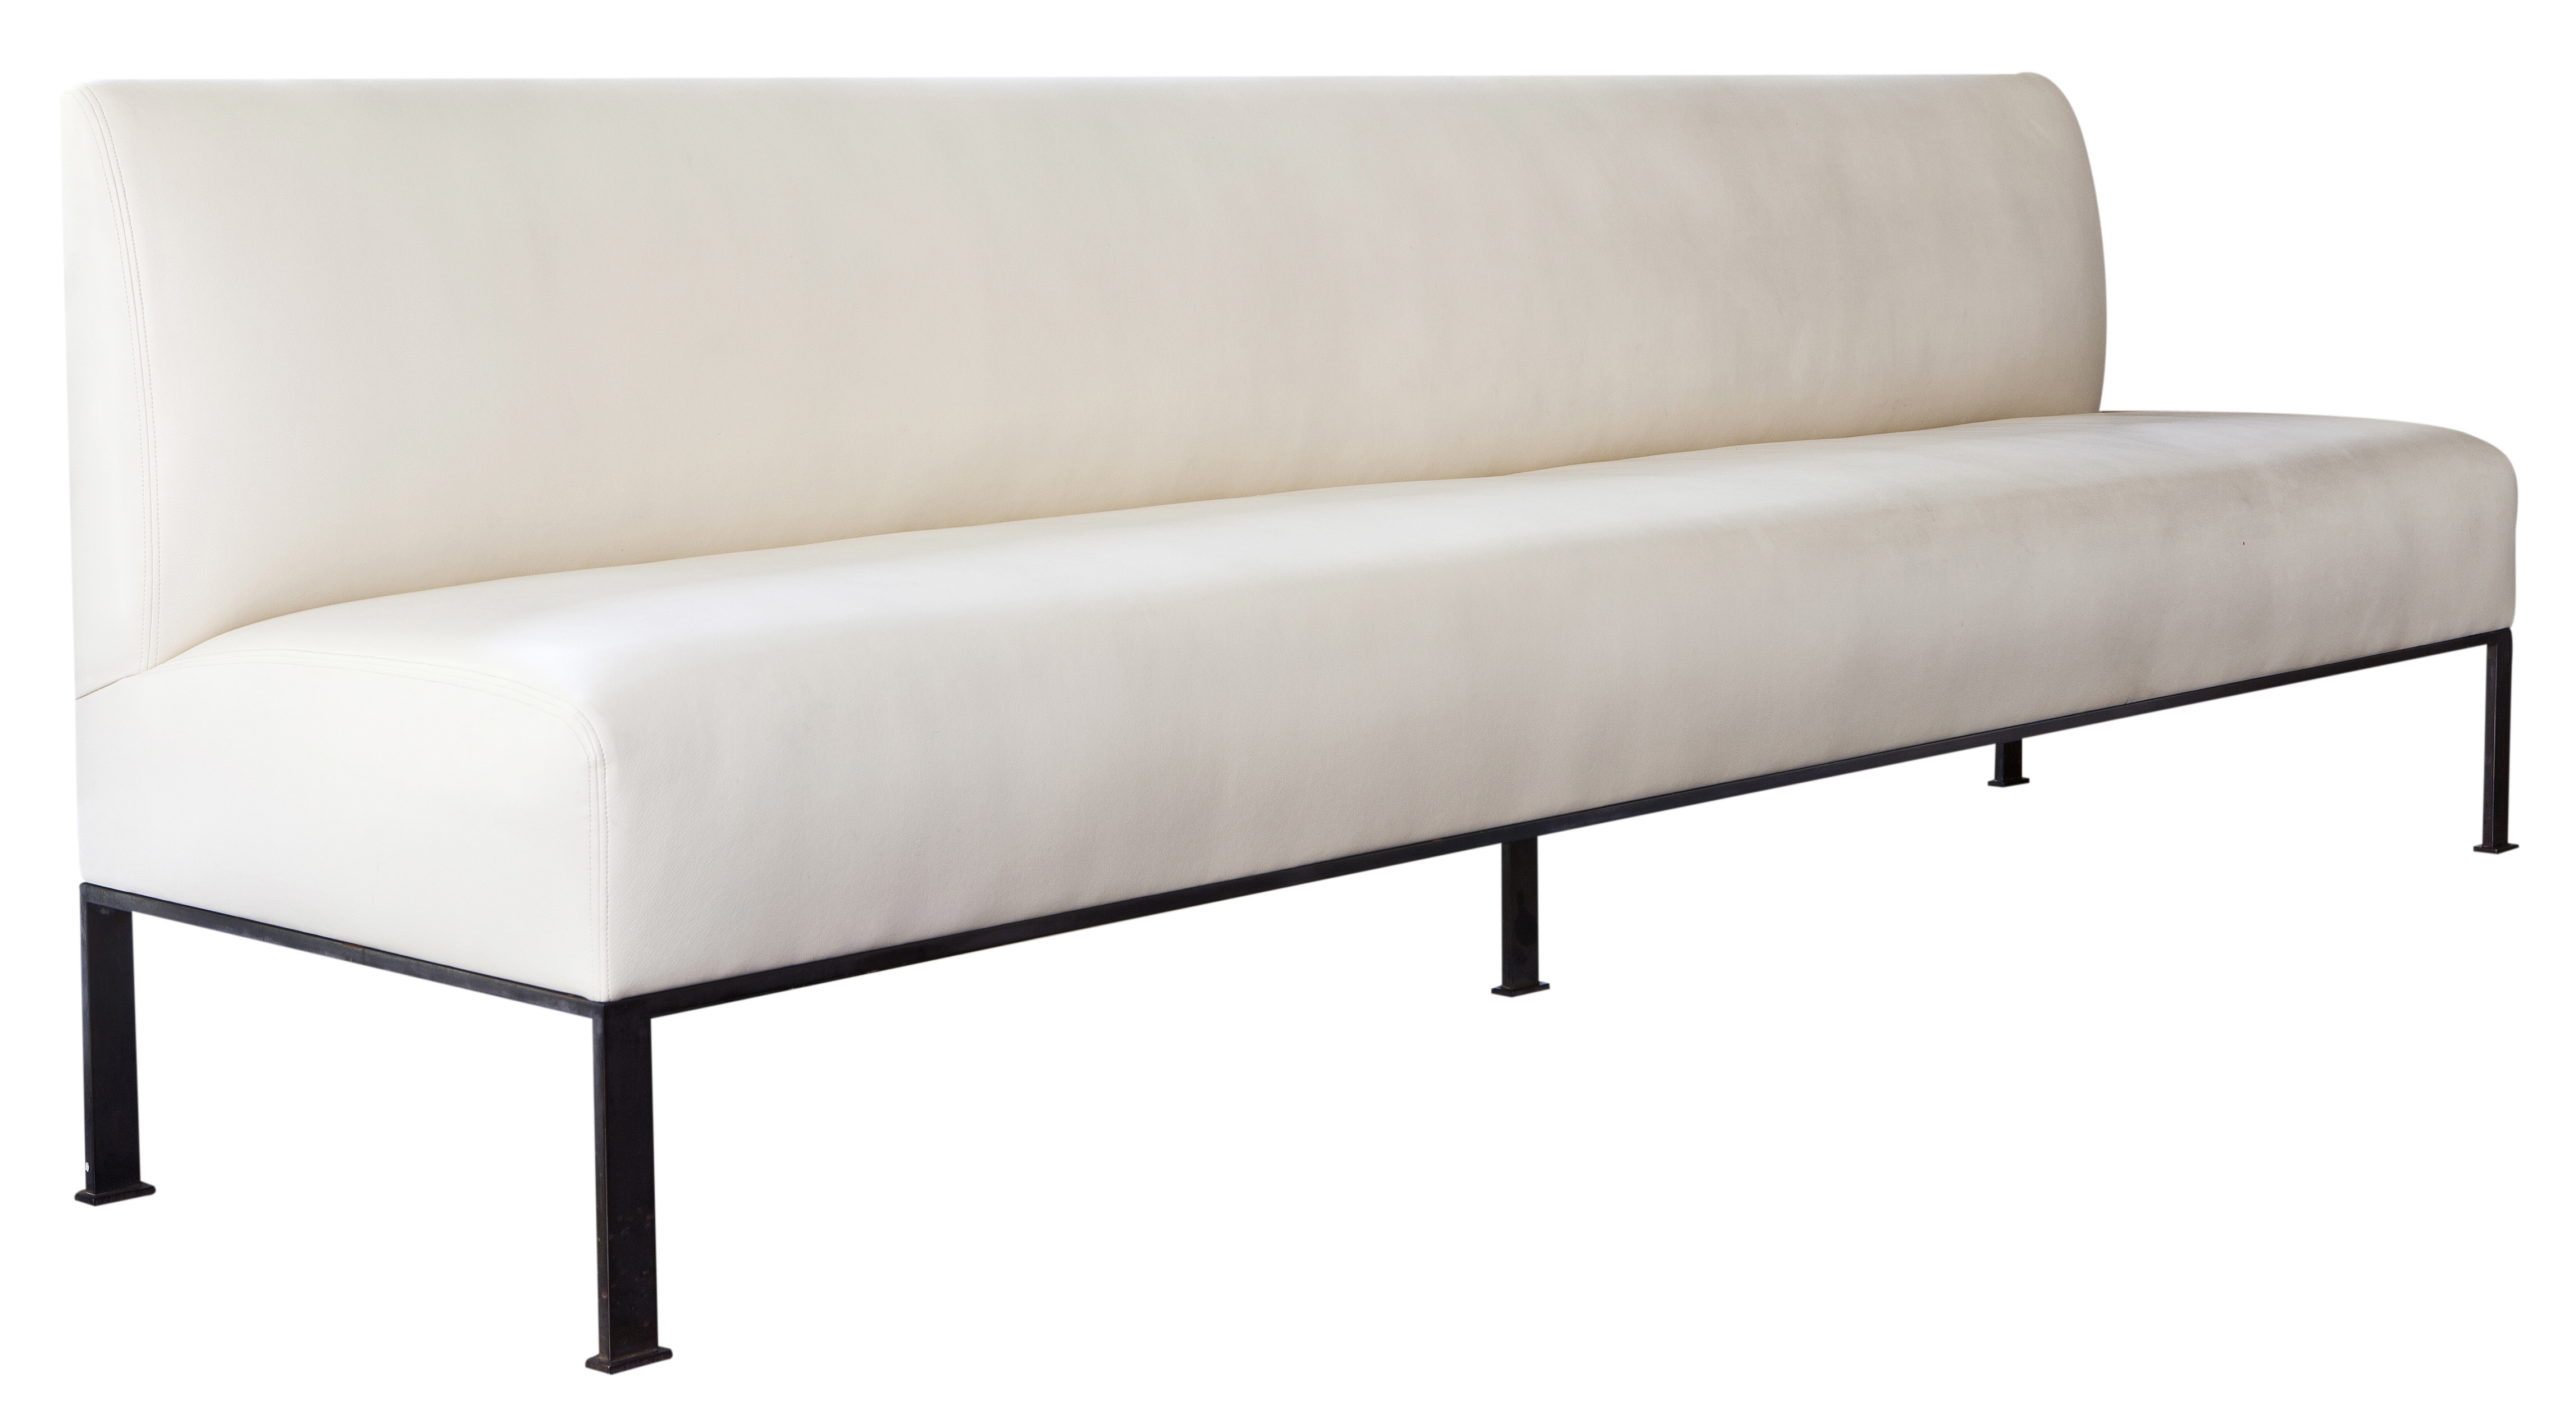 Studio_William_Hefner_products_bay_banquette_hefner_furniture_full_couch